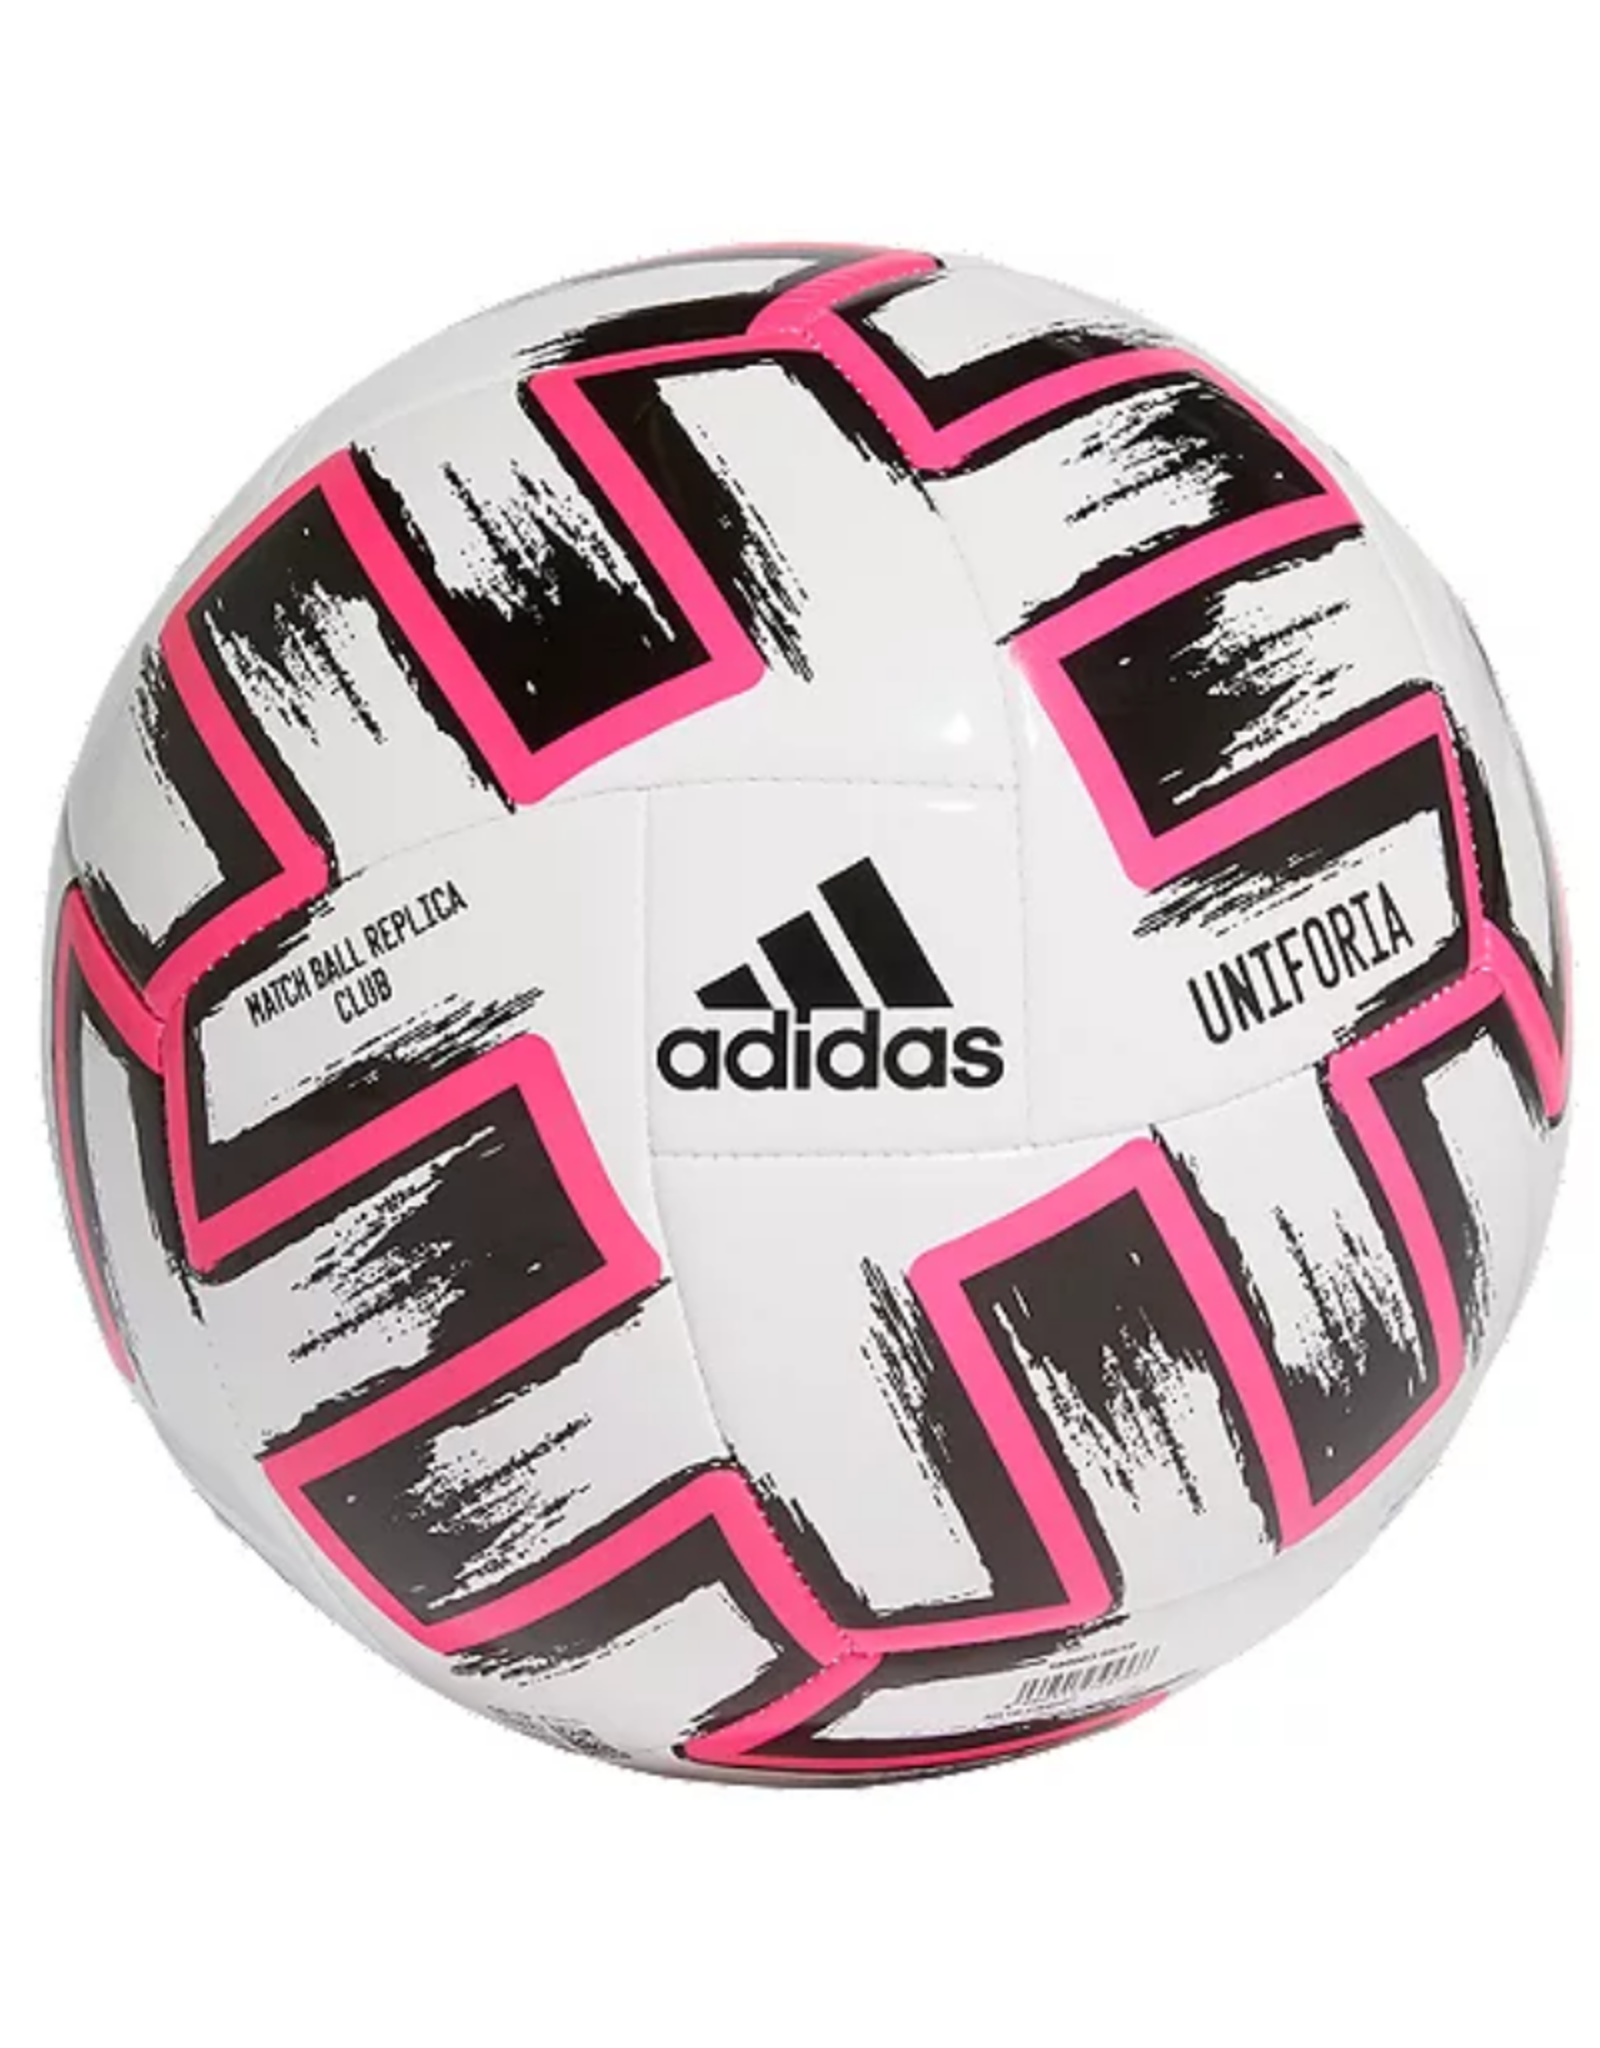 Adidas Adidas Euro 2020 Uniforia Club Soccer Ball Size 5 White/Pink